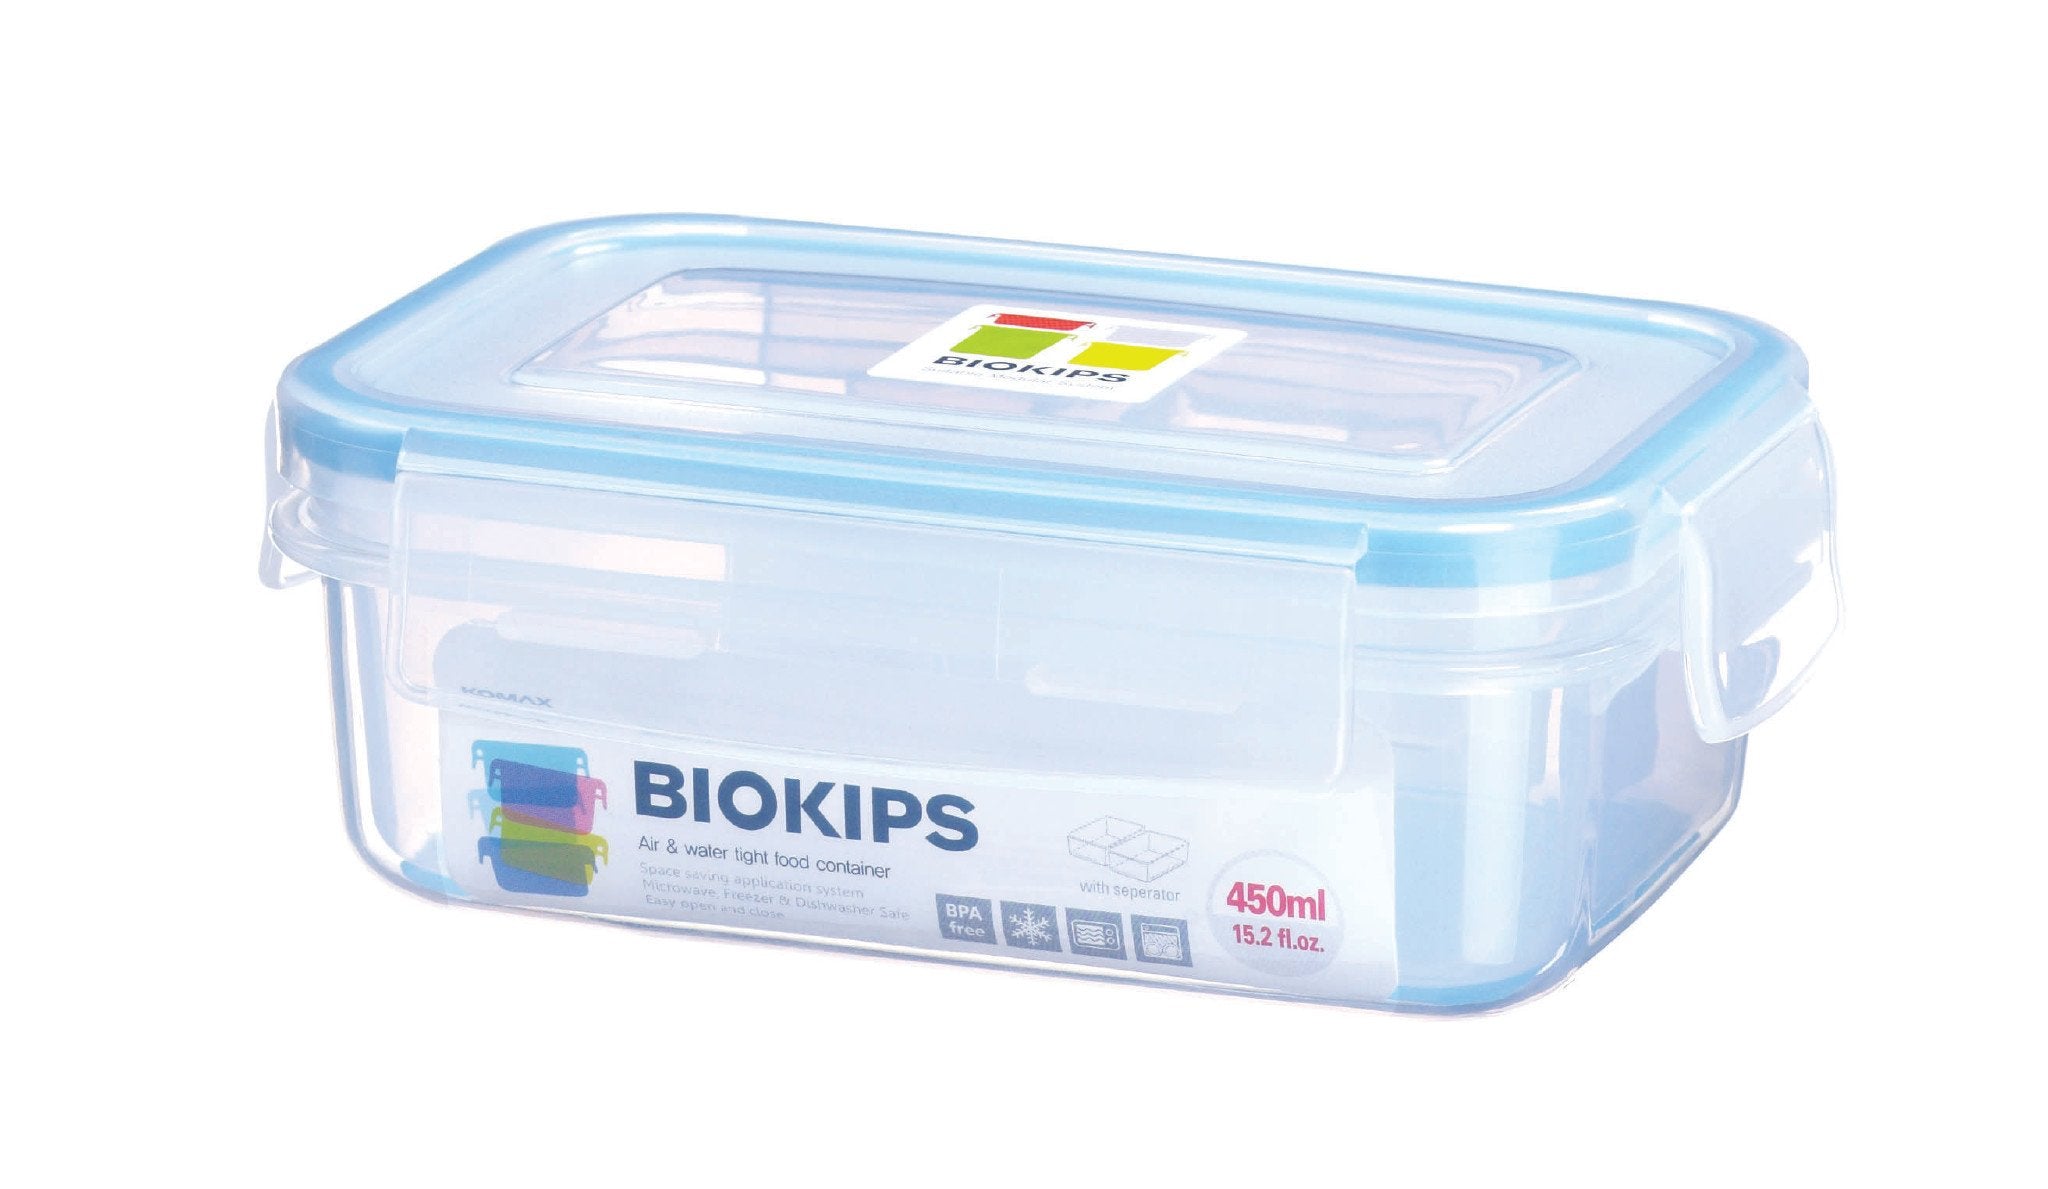 Komax Biokips Rectangular Food Storage Container With Separator, 450 ml